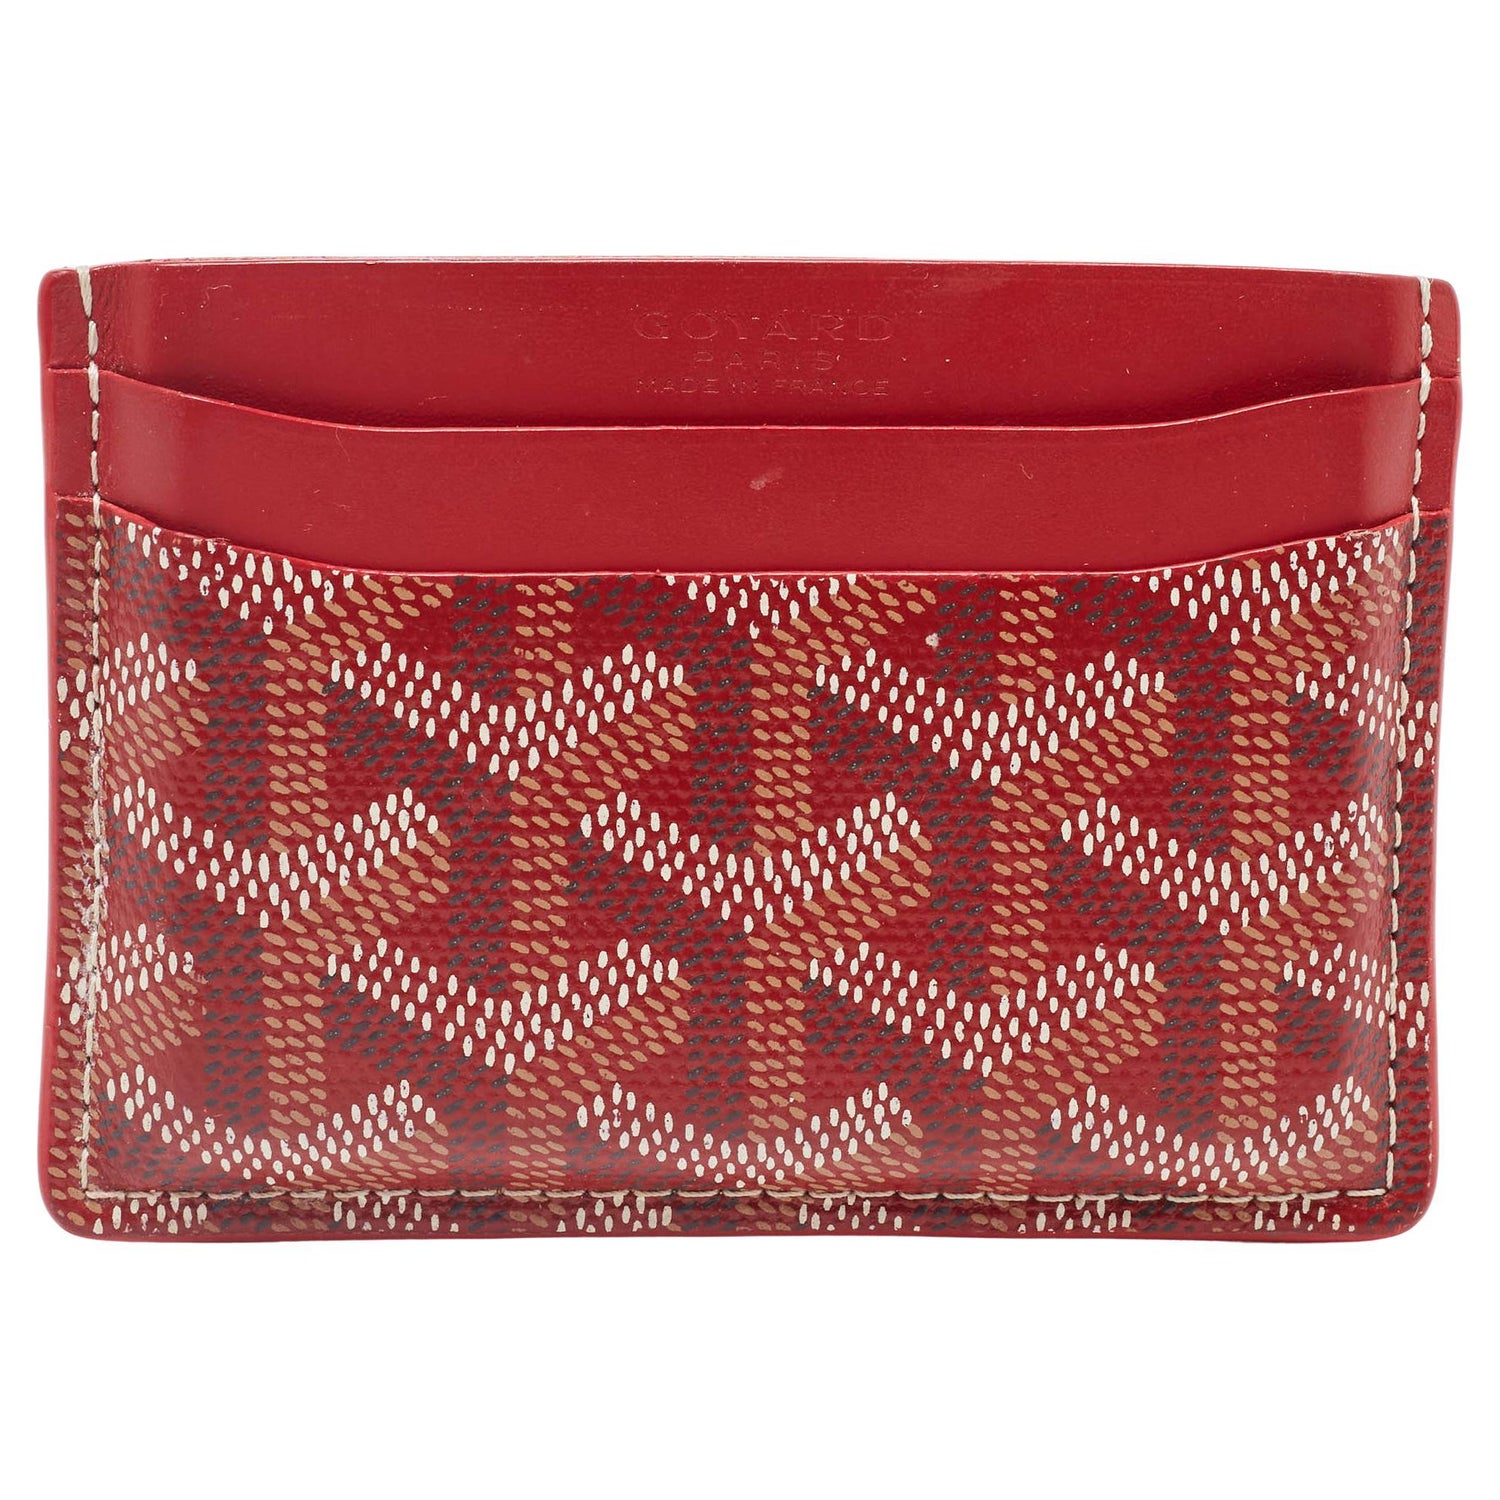 goyard wallet red